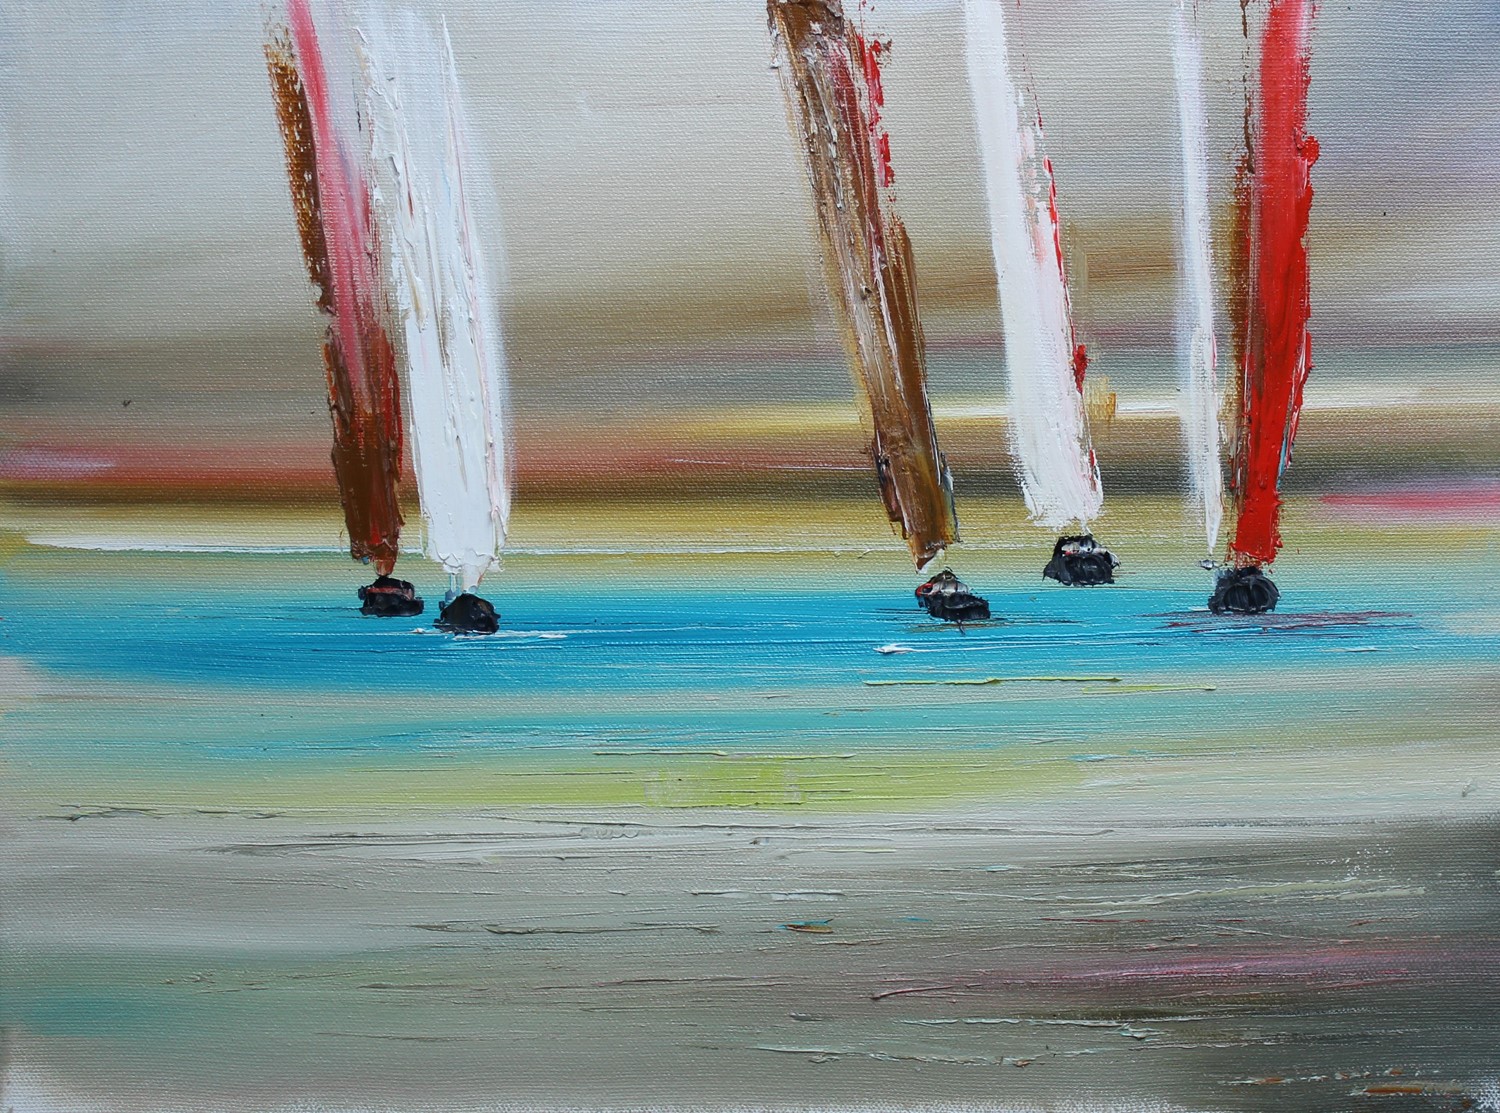 'The six sails' by artist Rosanne Barr